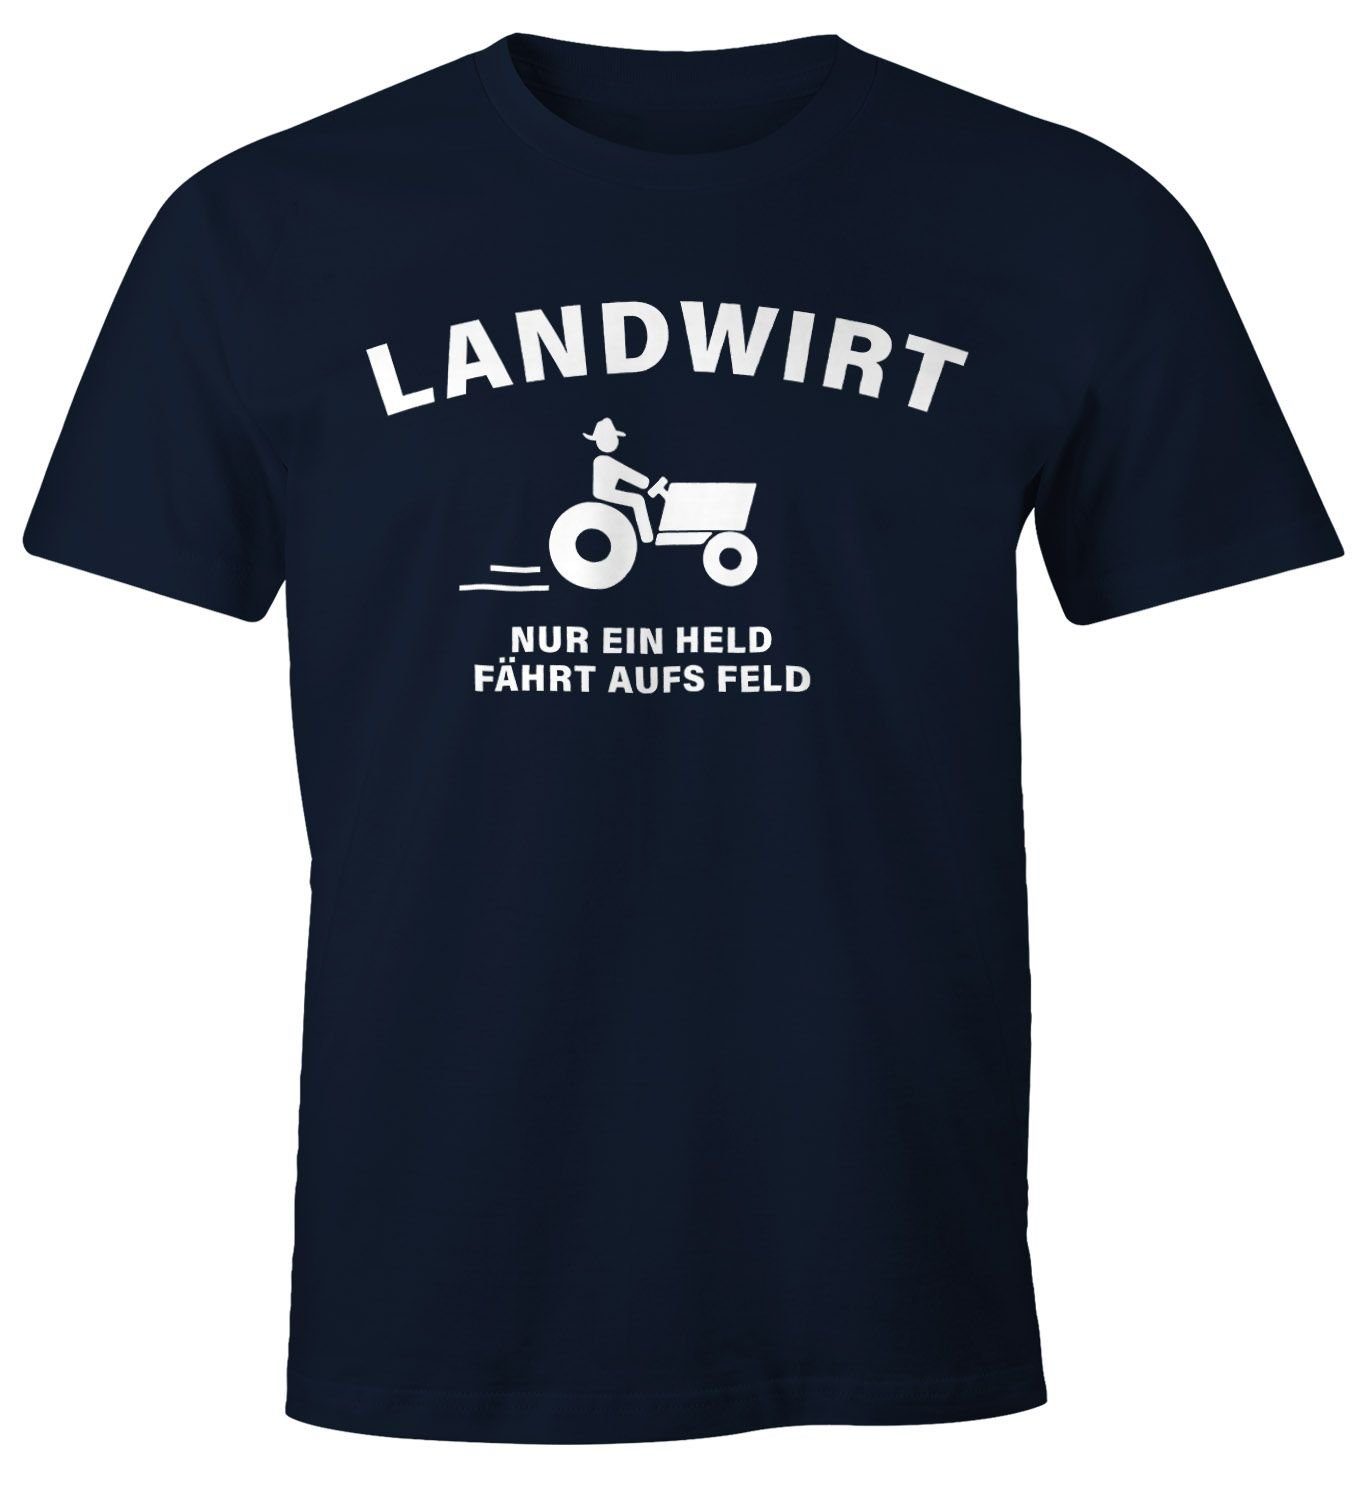 Feld Print-Shirt Moonworks® Landwirt ein aufs held fährt T-Shirt MoonWorks navy mit nur Print Herren